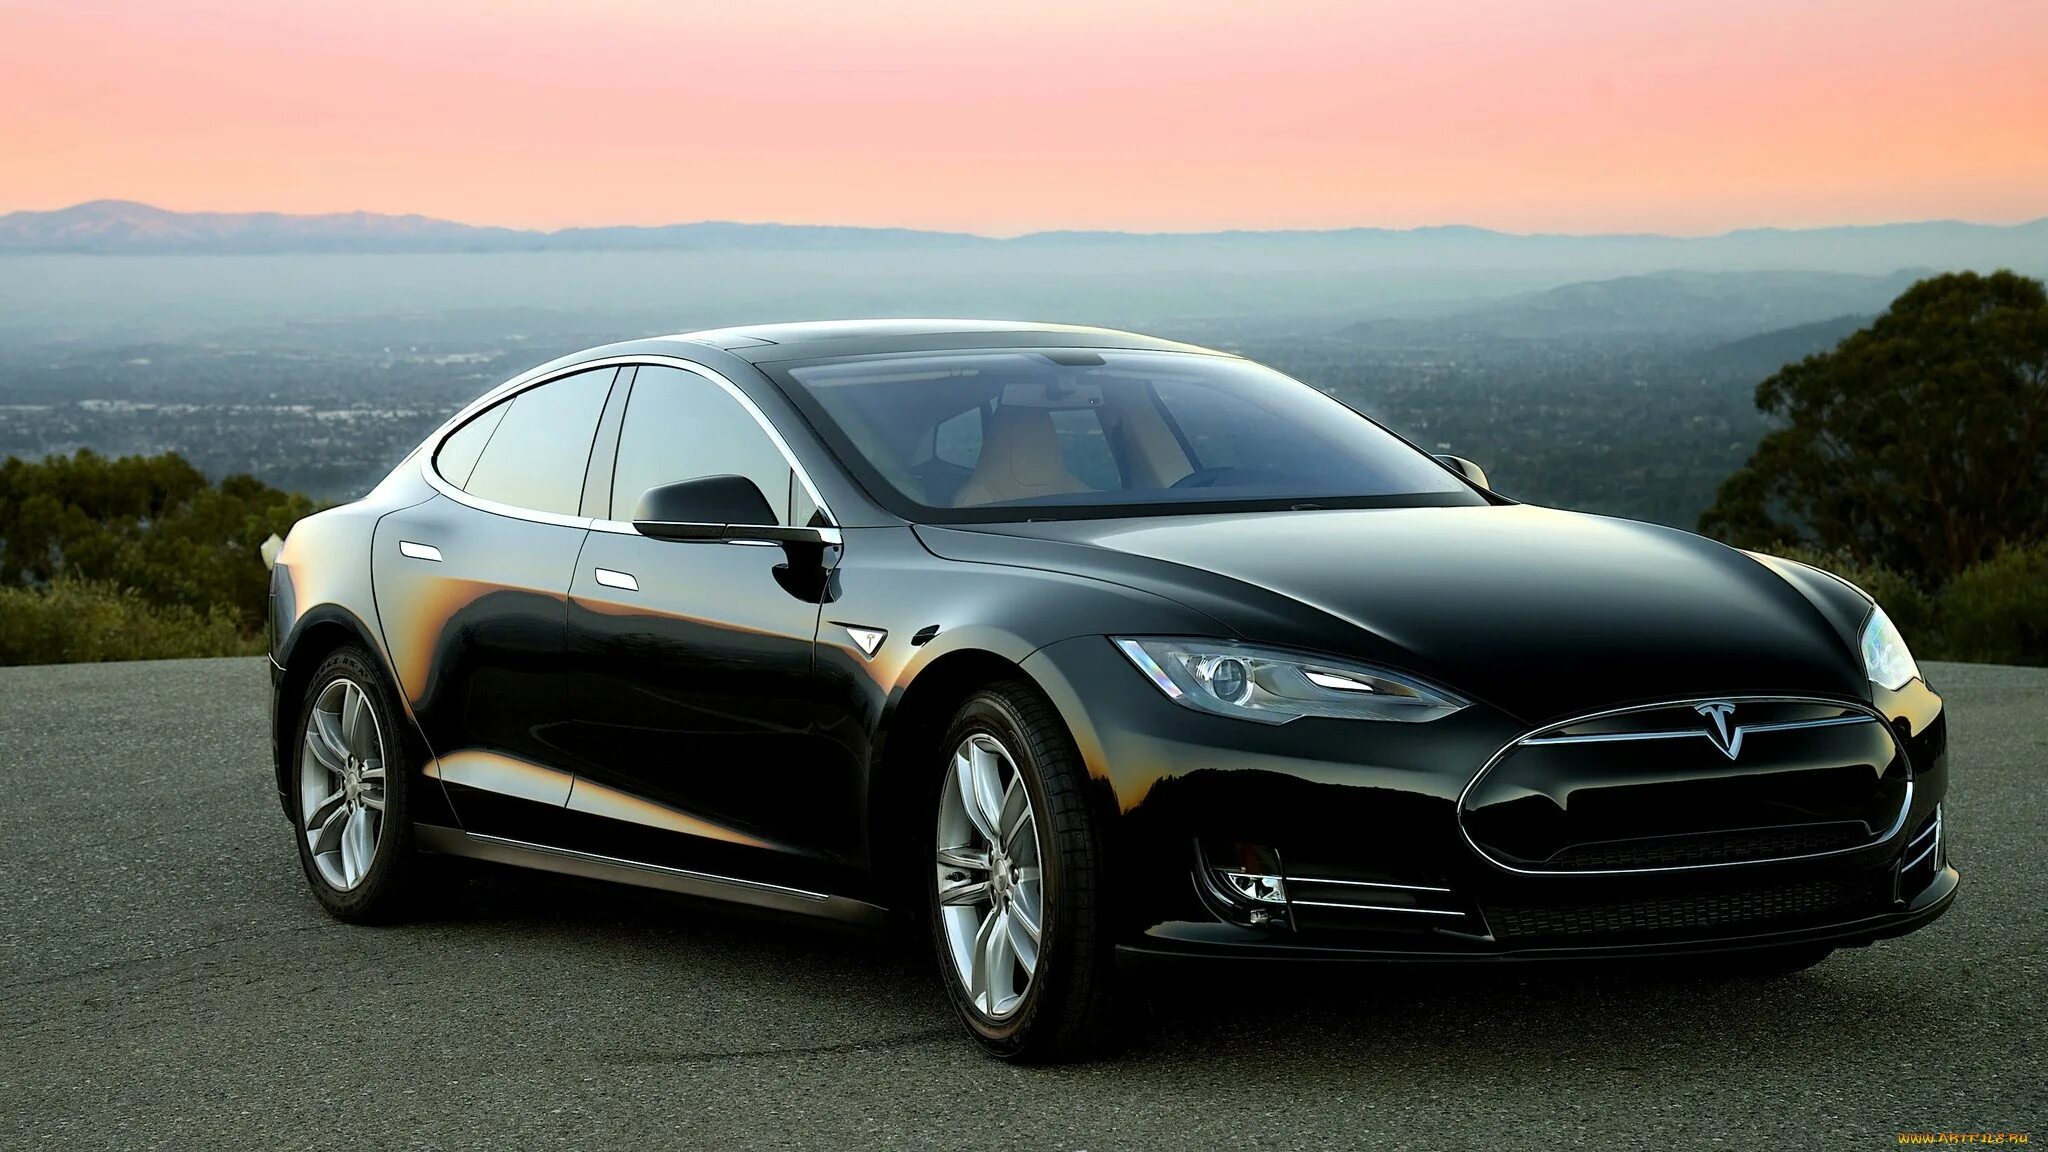 Тесла какой машина. Тесла автомобиль. Машина Tesla model s. Электромобиль Тесла. Tesla Motors model s.